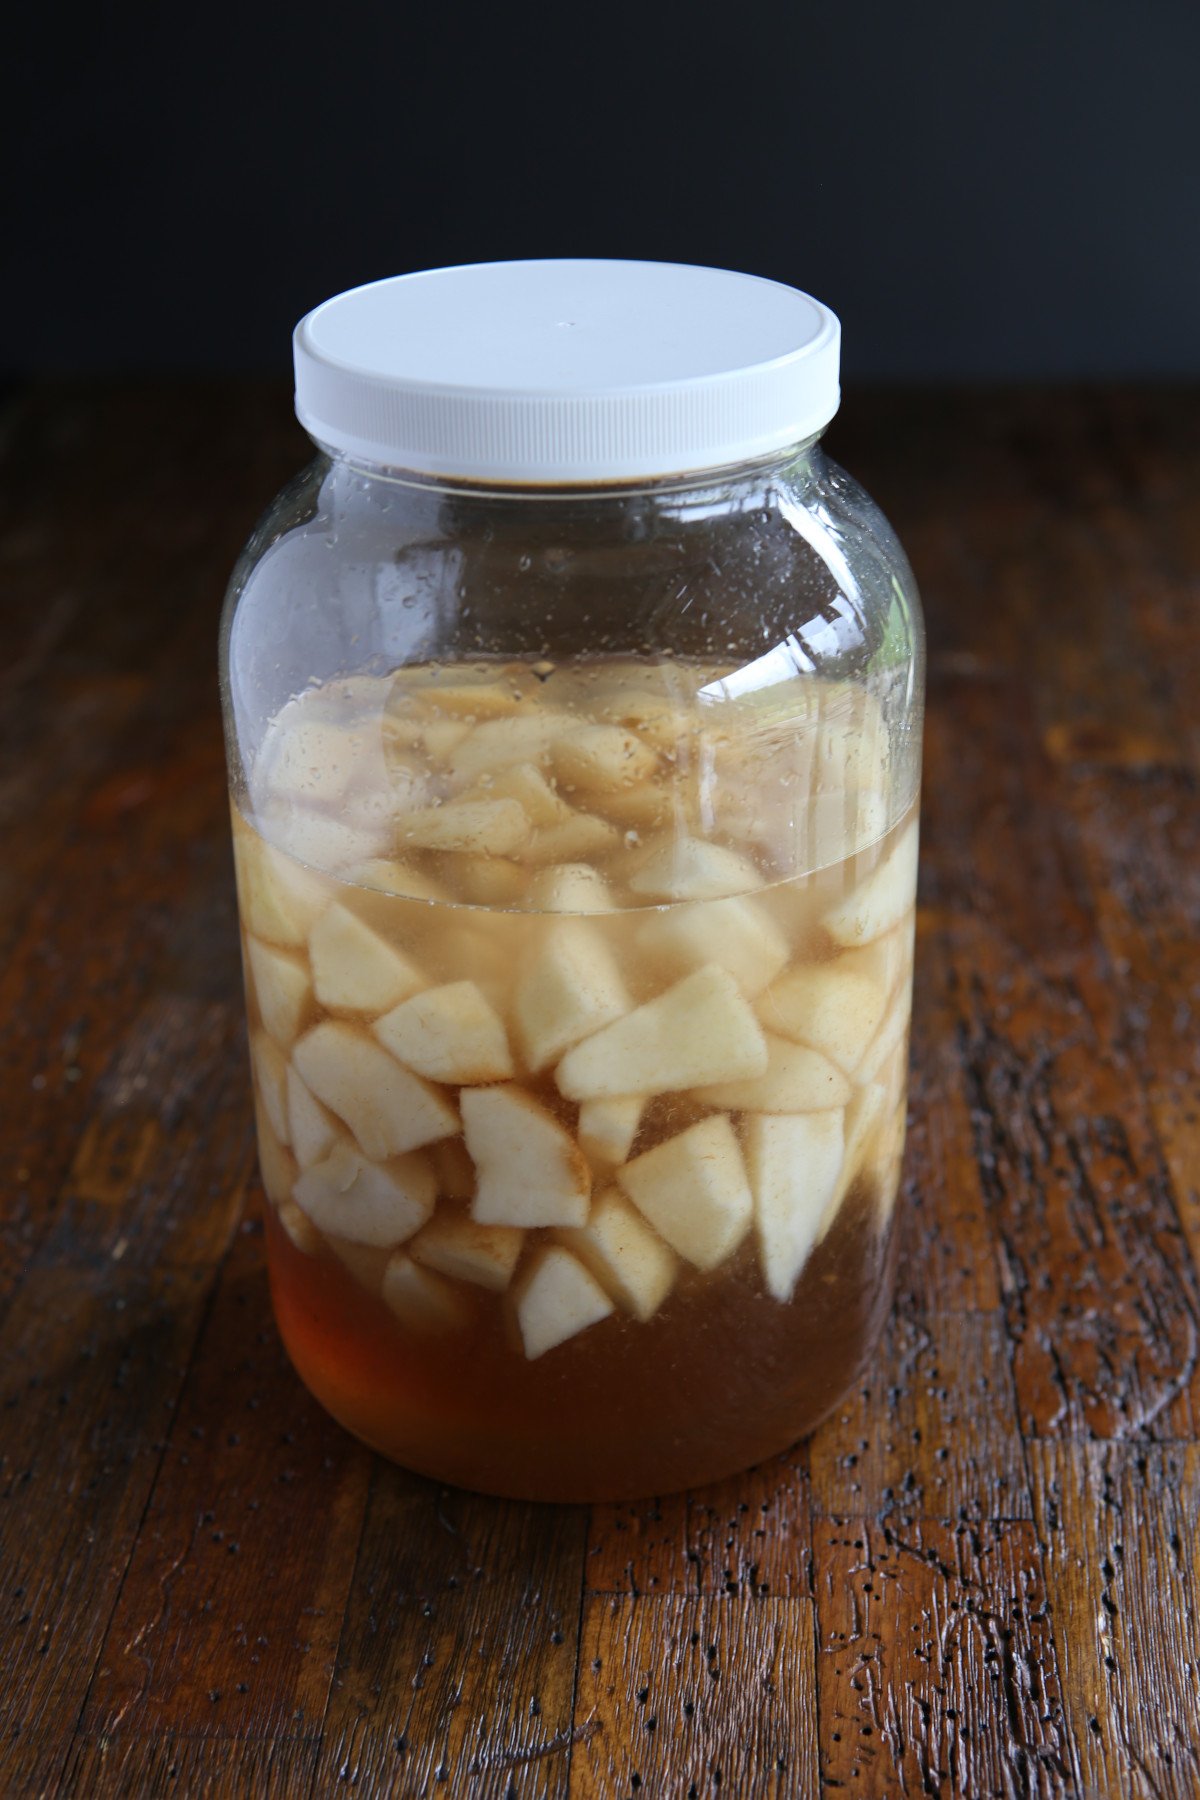 Pear liqueur resting in a 1-gallon jar.